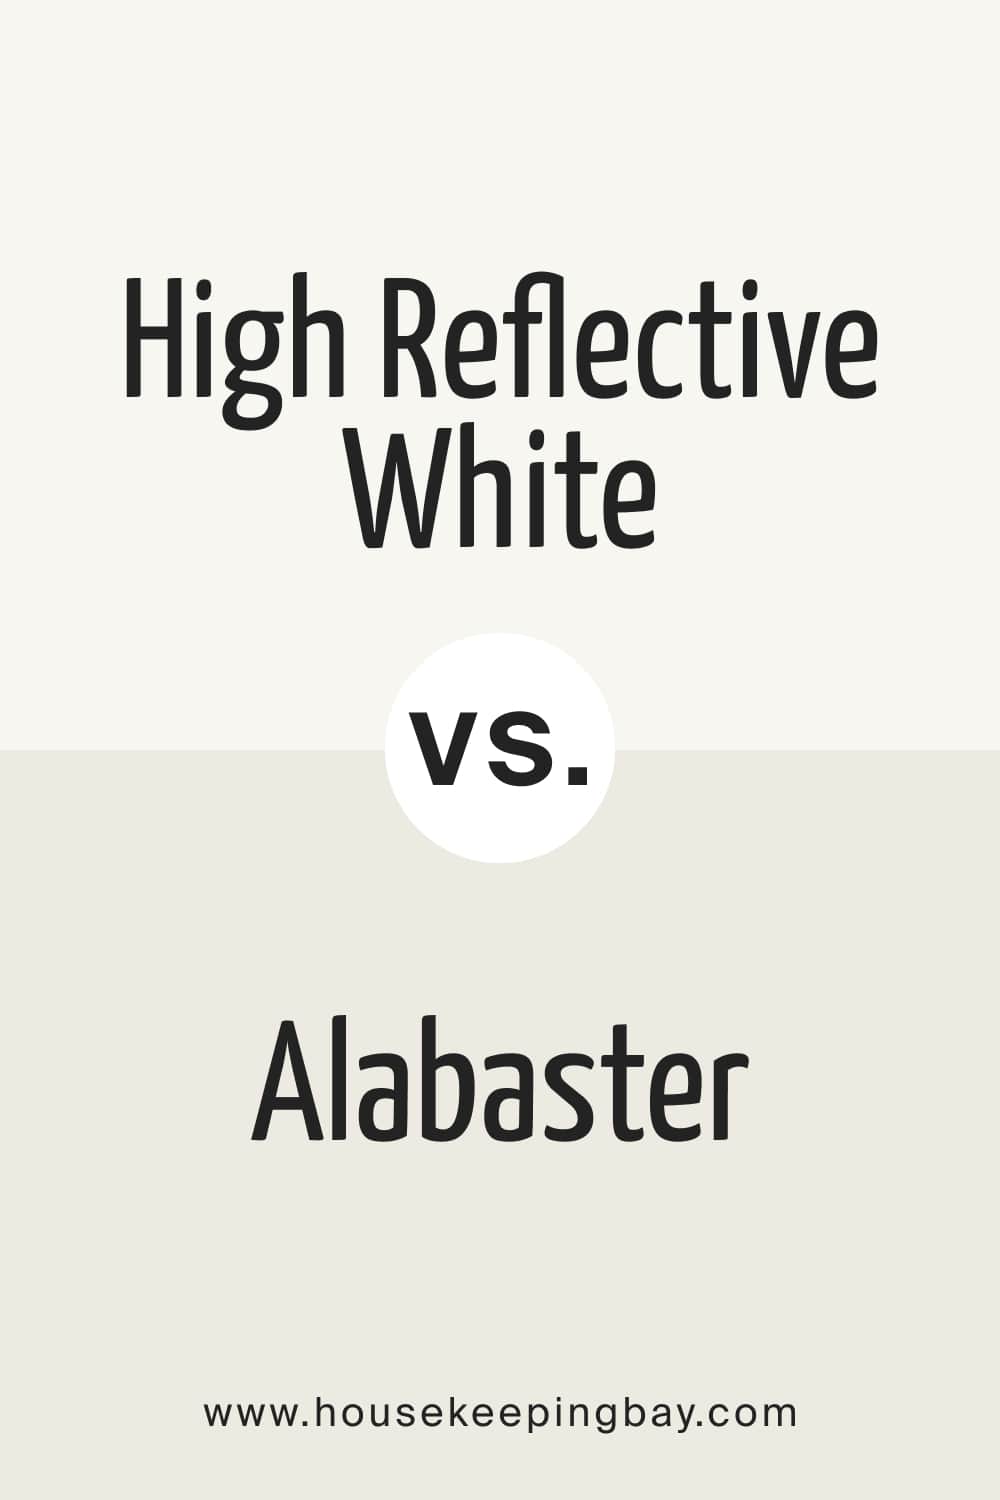 High Reflective White vs Alabaster